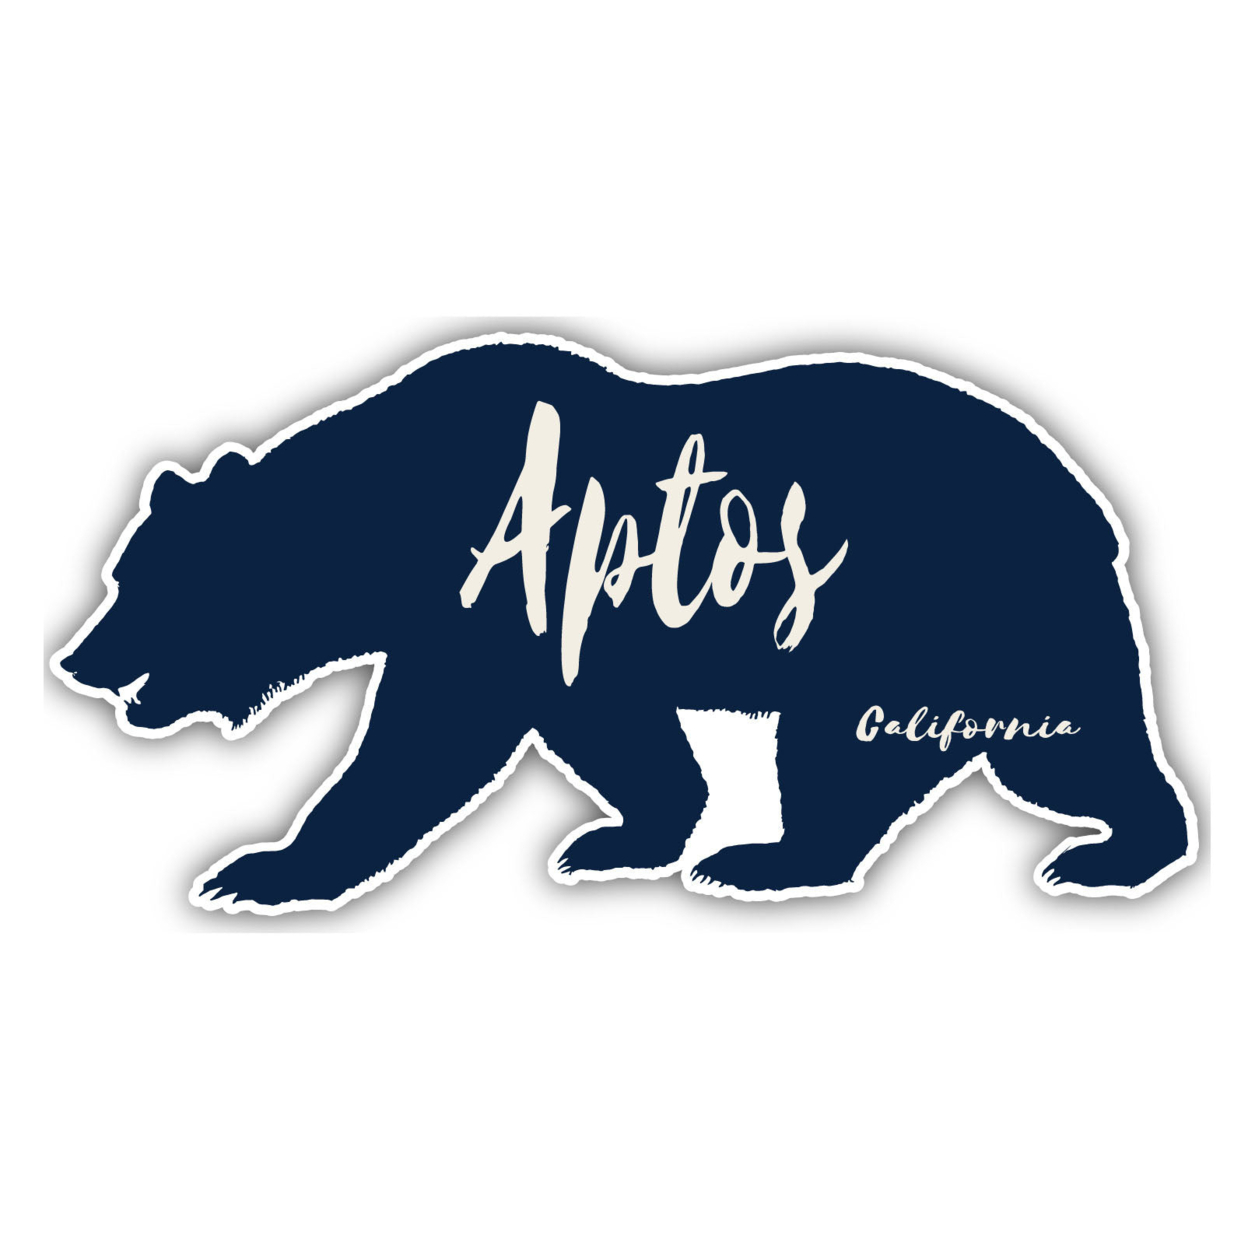 Aptos California Souvenir Decorative Stickers (Choose Theme And Size) - Single Unit, 6-Inch, Adventures Awaits